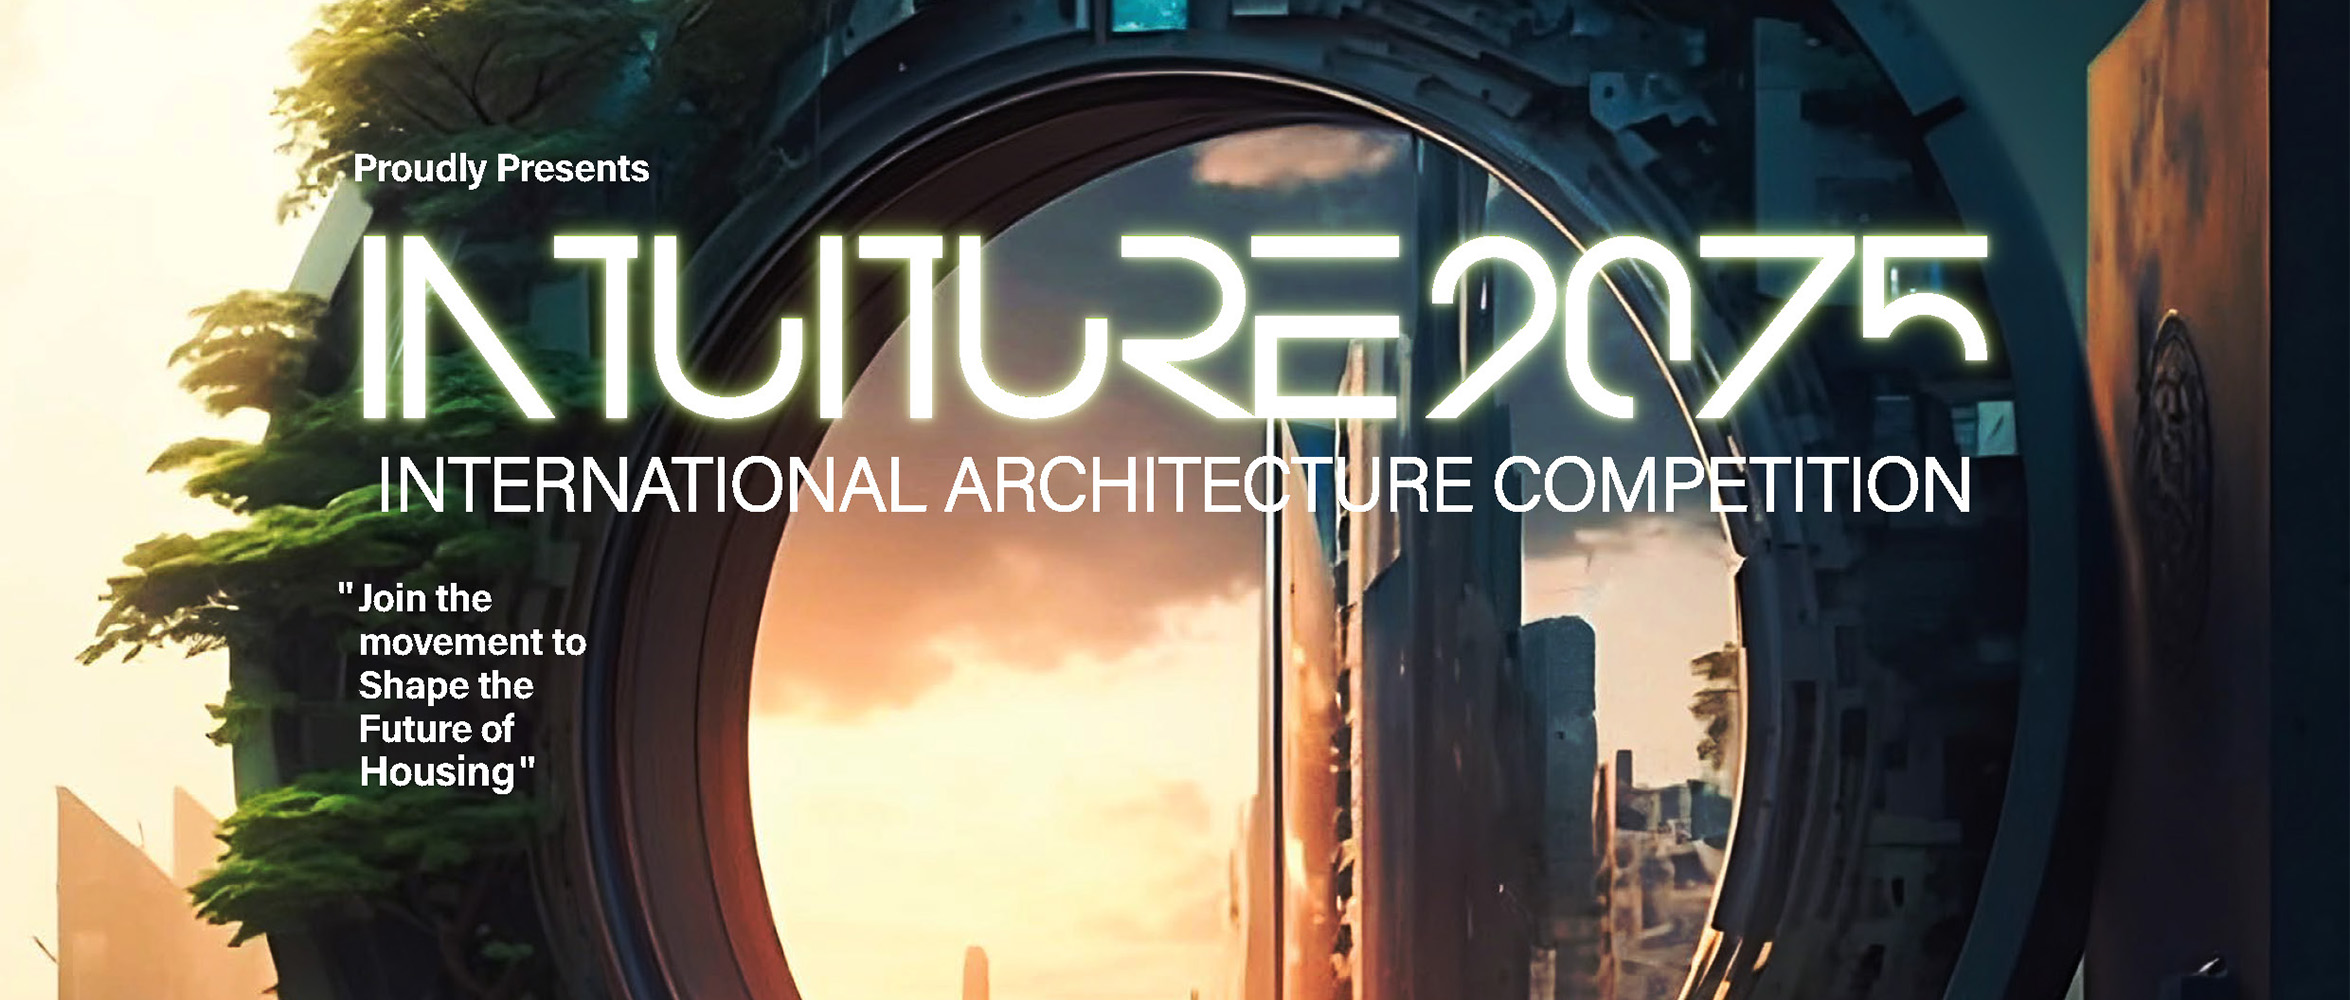 Intuiture 2075——国际建筑竞赛